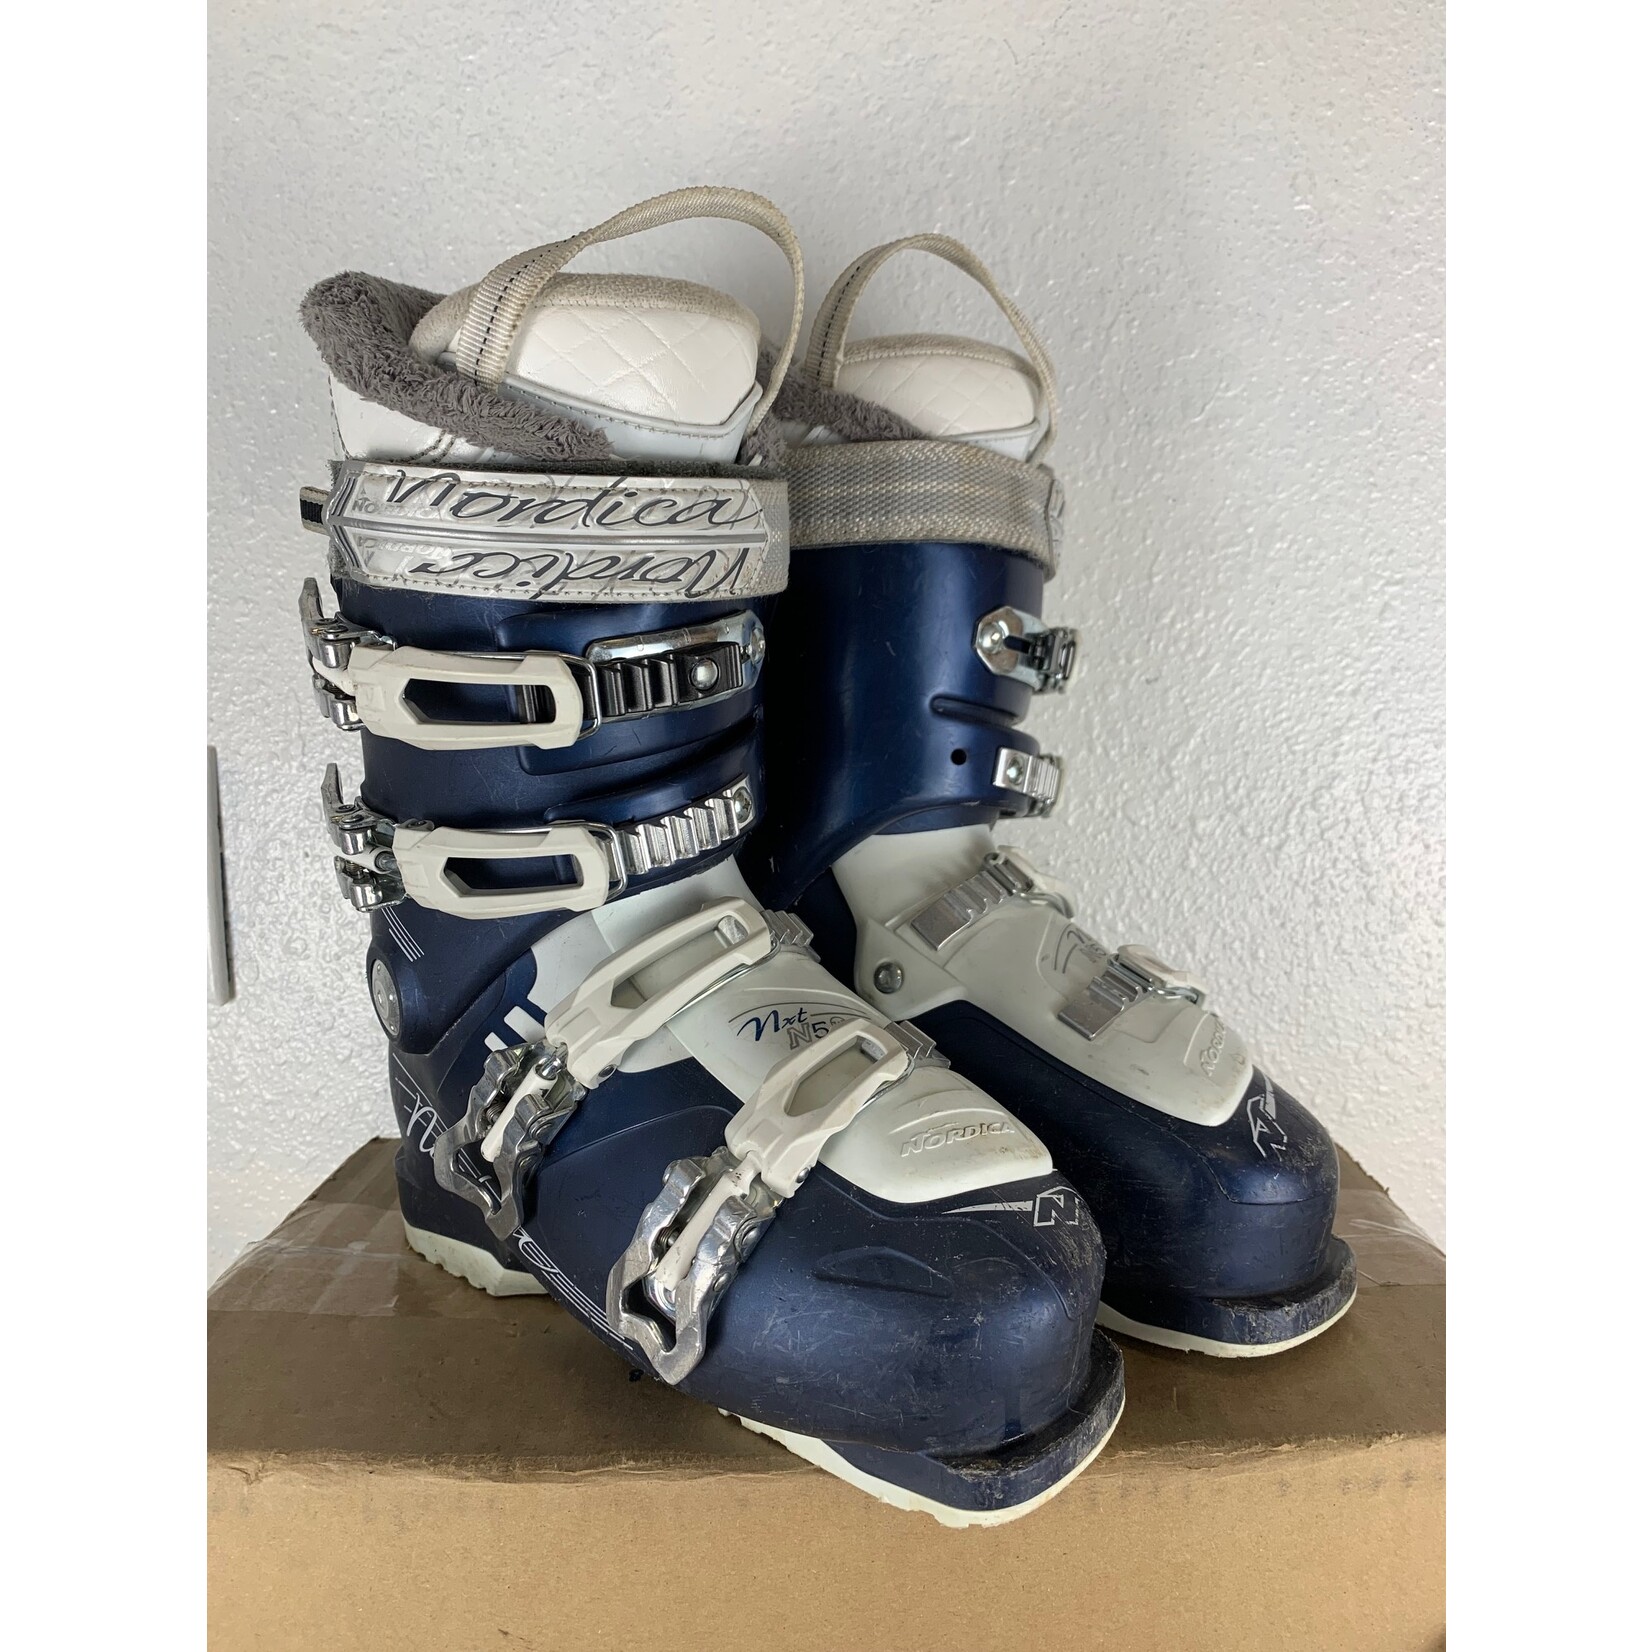 Nordica Nordica NXT N5W Ski Boots, Size 23/23.5